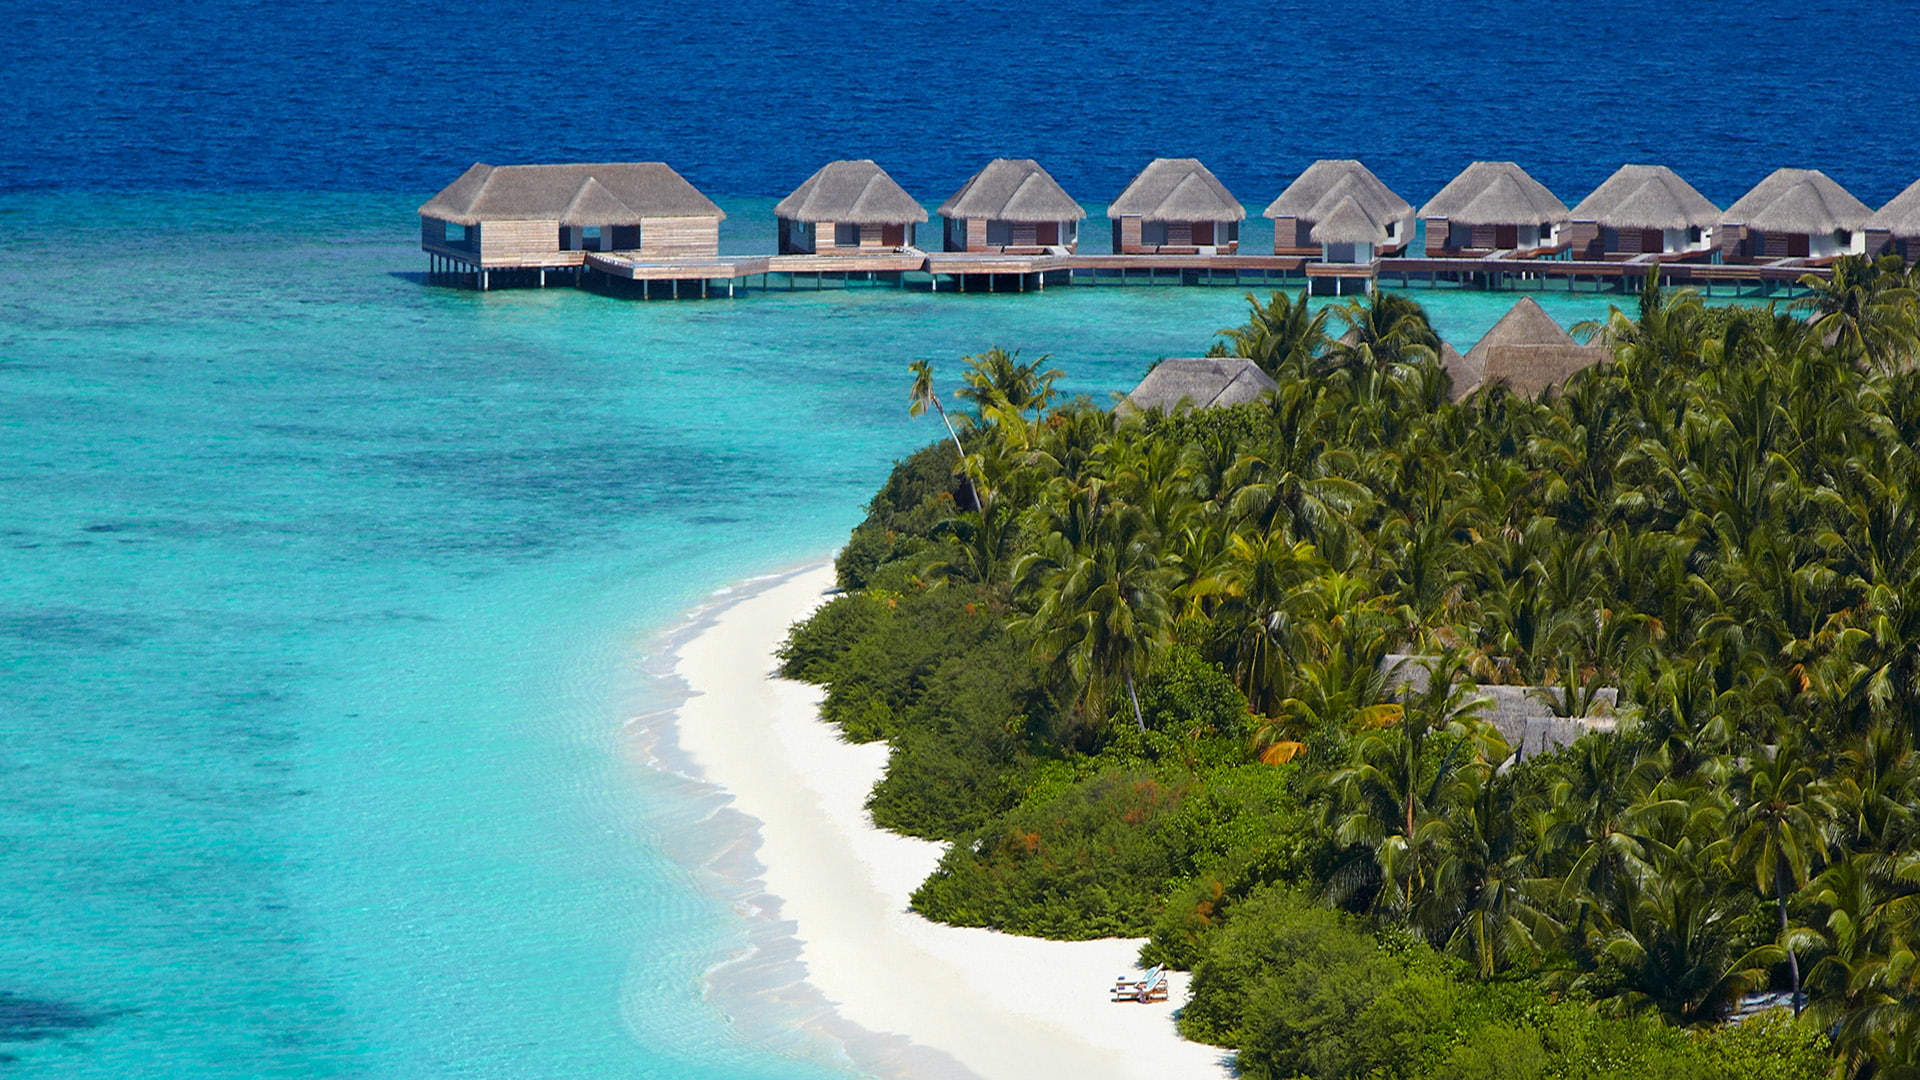 Dusit Thani Baa Atoll Resort Maldives Beach View From The Air 1920×1080